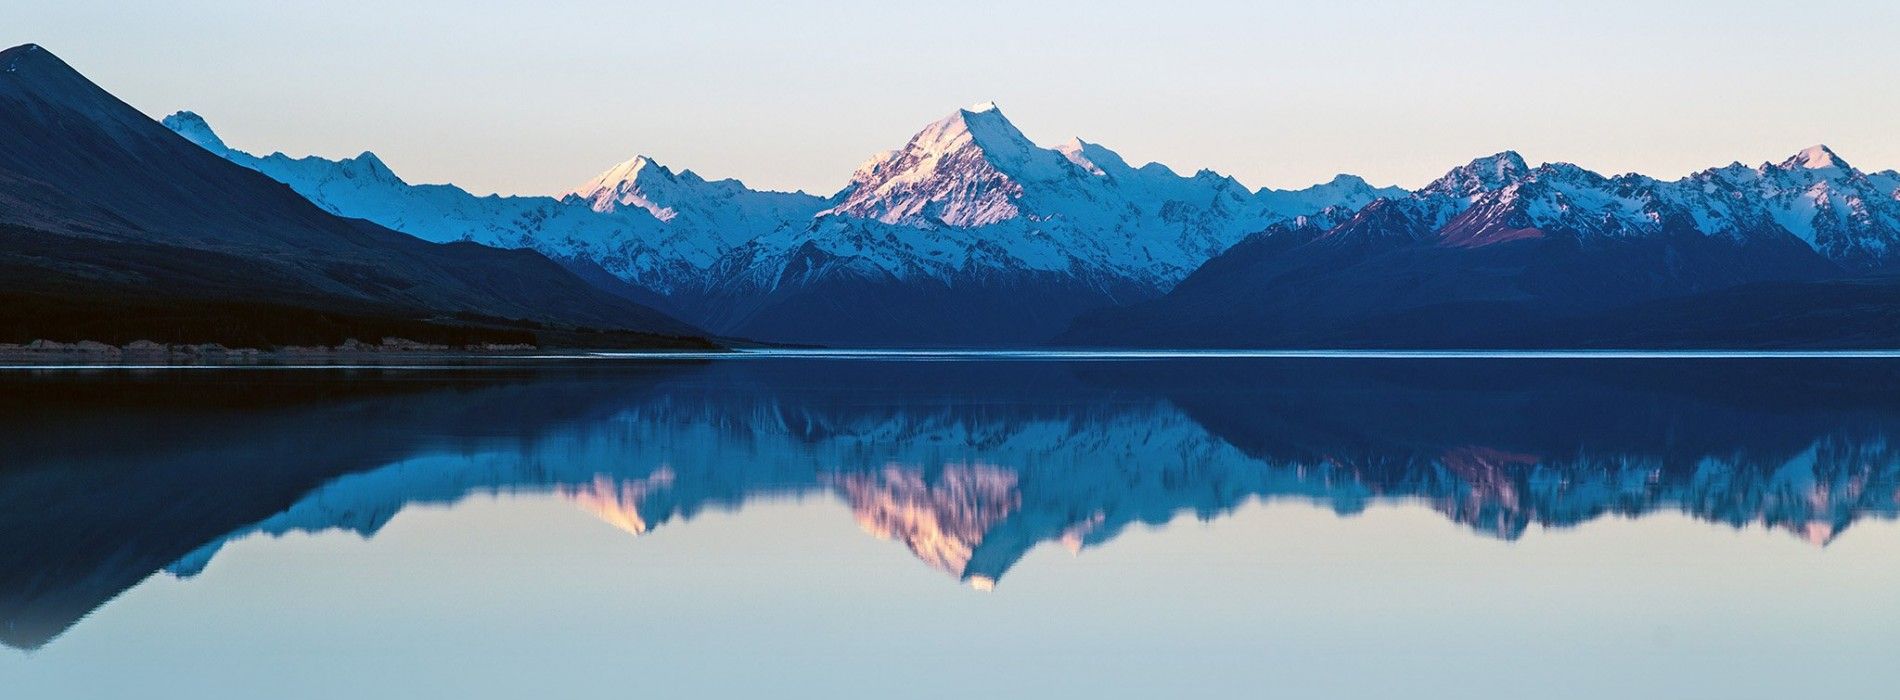 Reflection-Lake-Blue-Mountain-Water-River-Nature-ipad-air-wallpaper-ilikewallpaper_com-1900x700_c.jpg